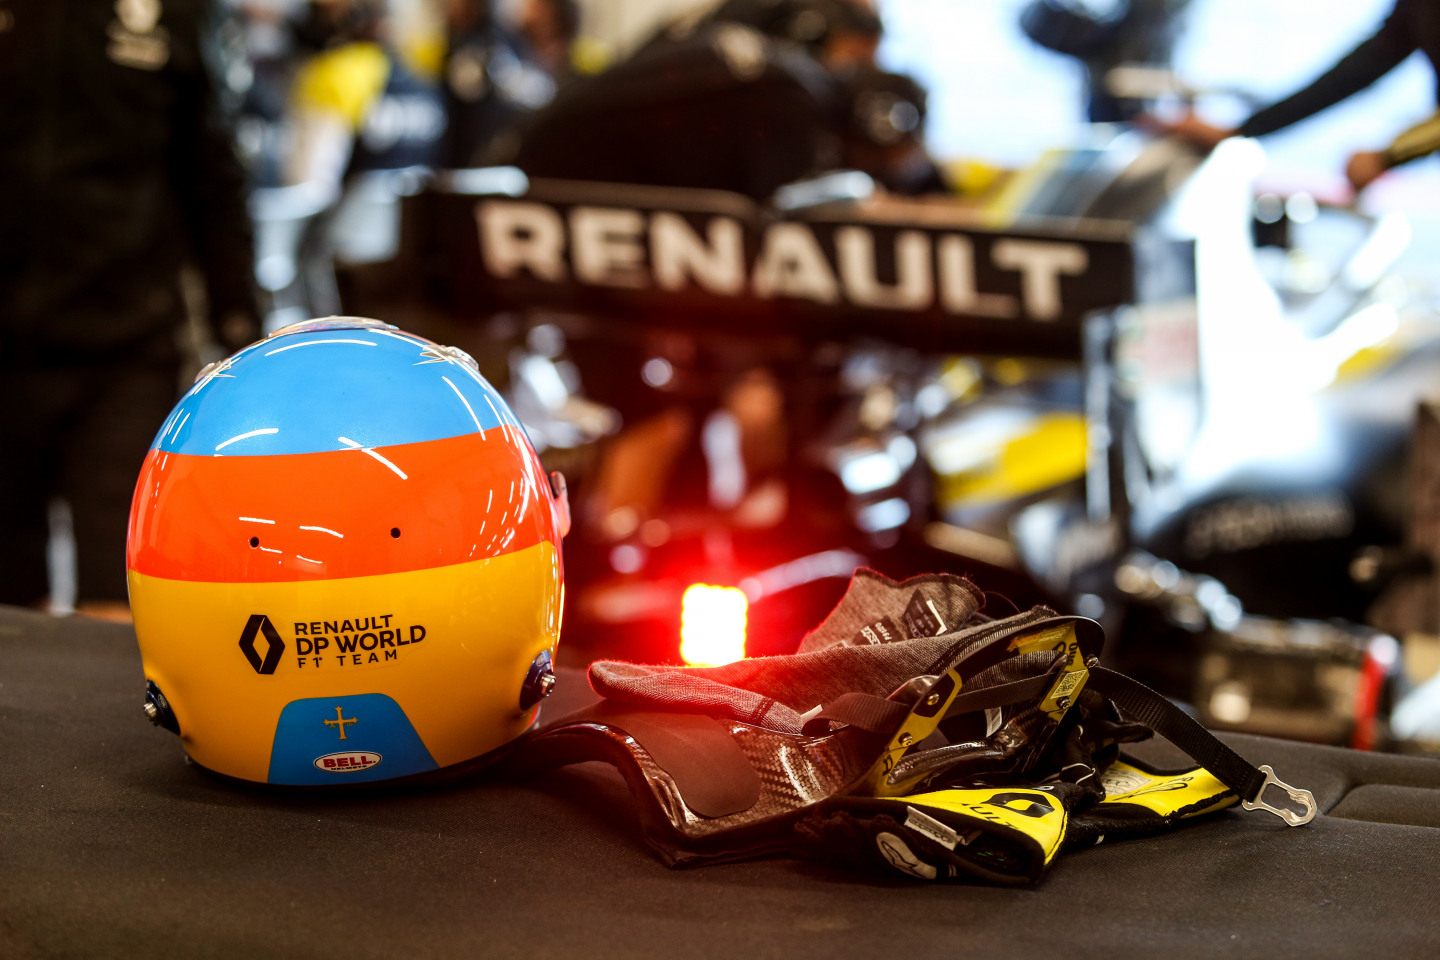 Фернандо Алонсо, съемочный день Renault в Барселоне © Renault